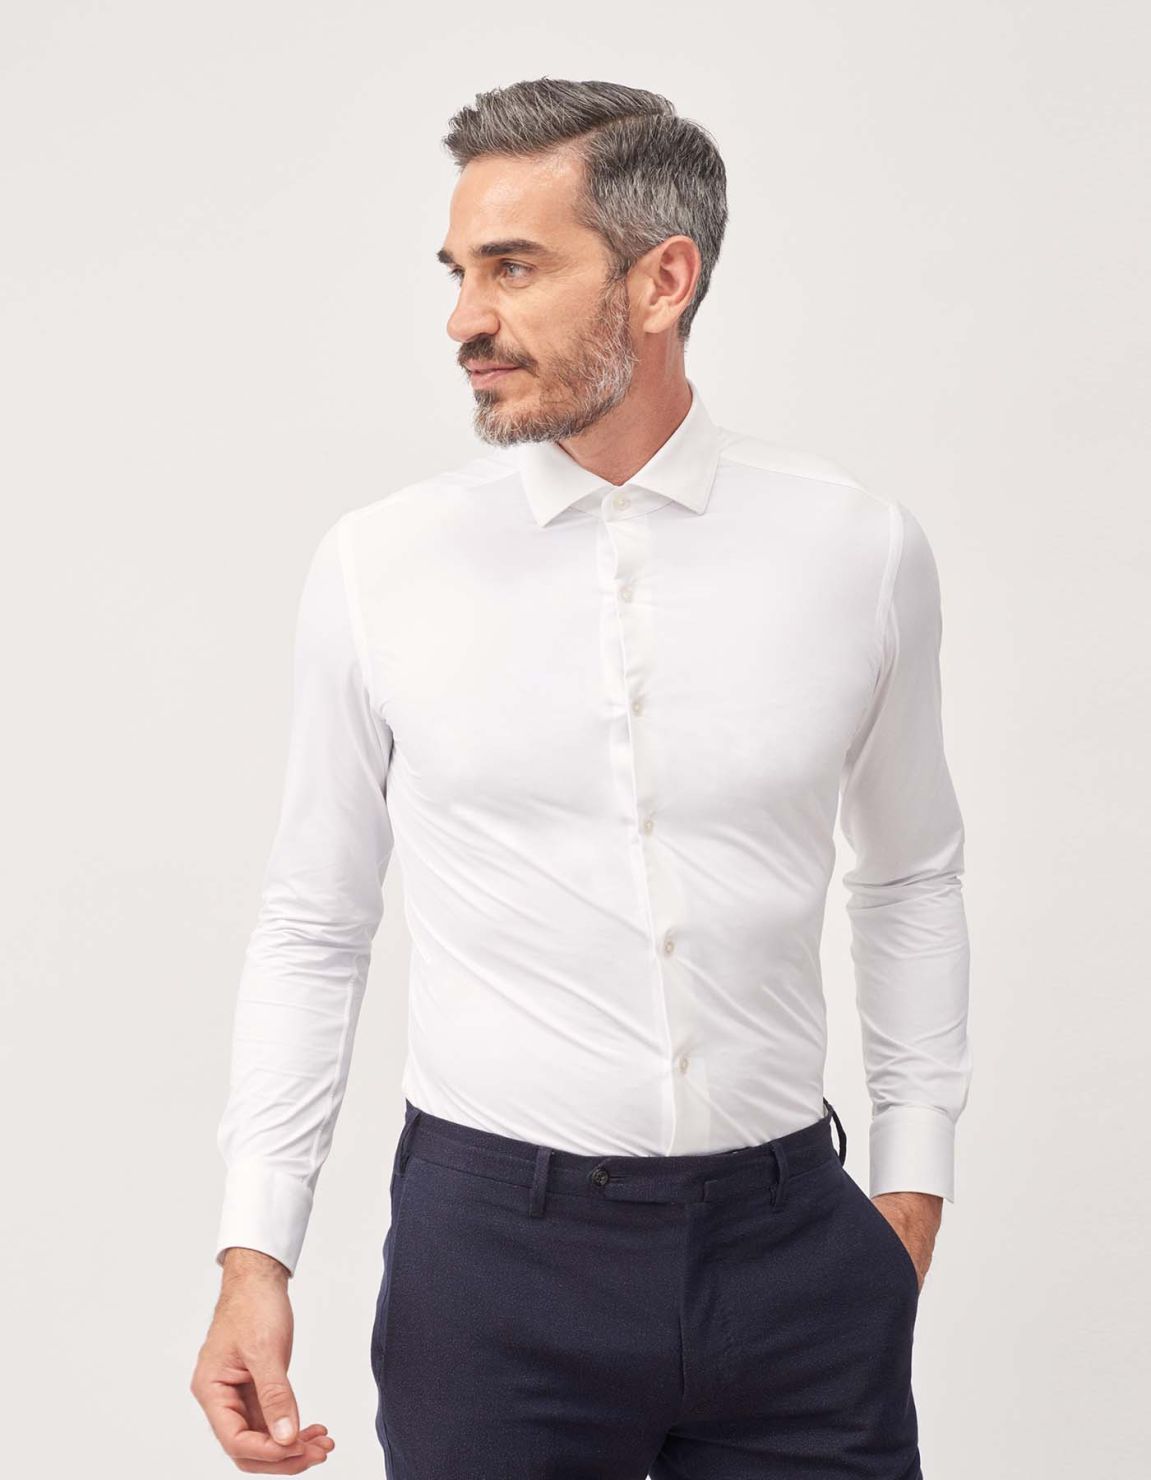 Shirt Collar small cutaway White Twill Tailor Custom Fit 5